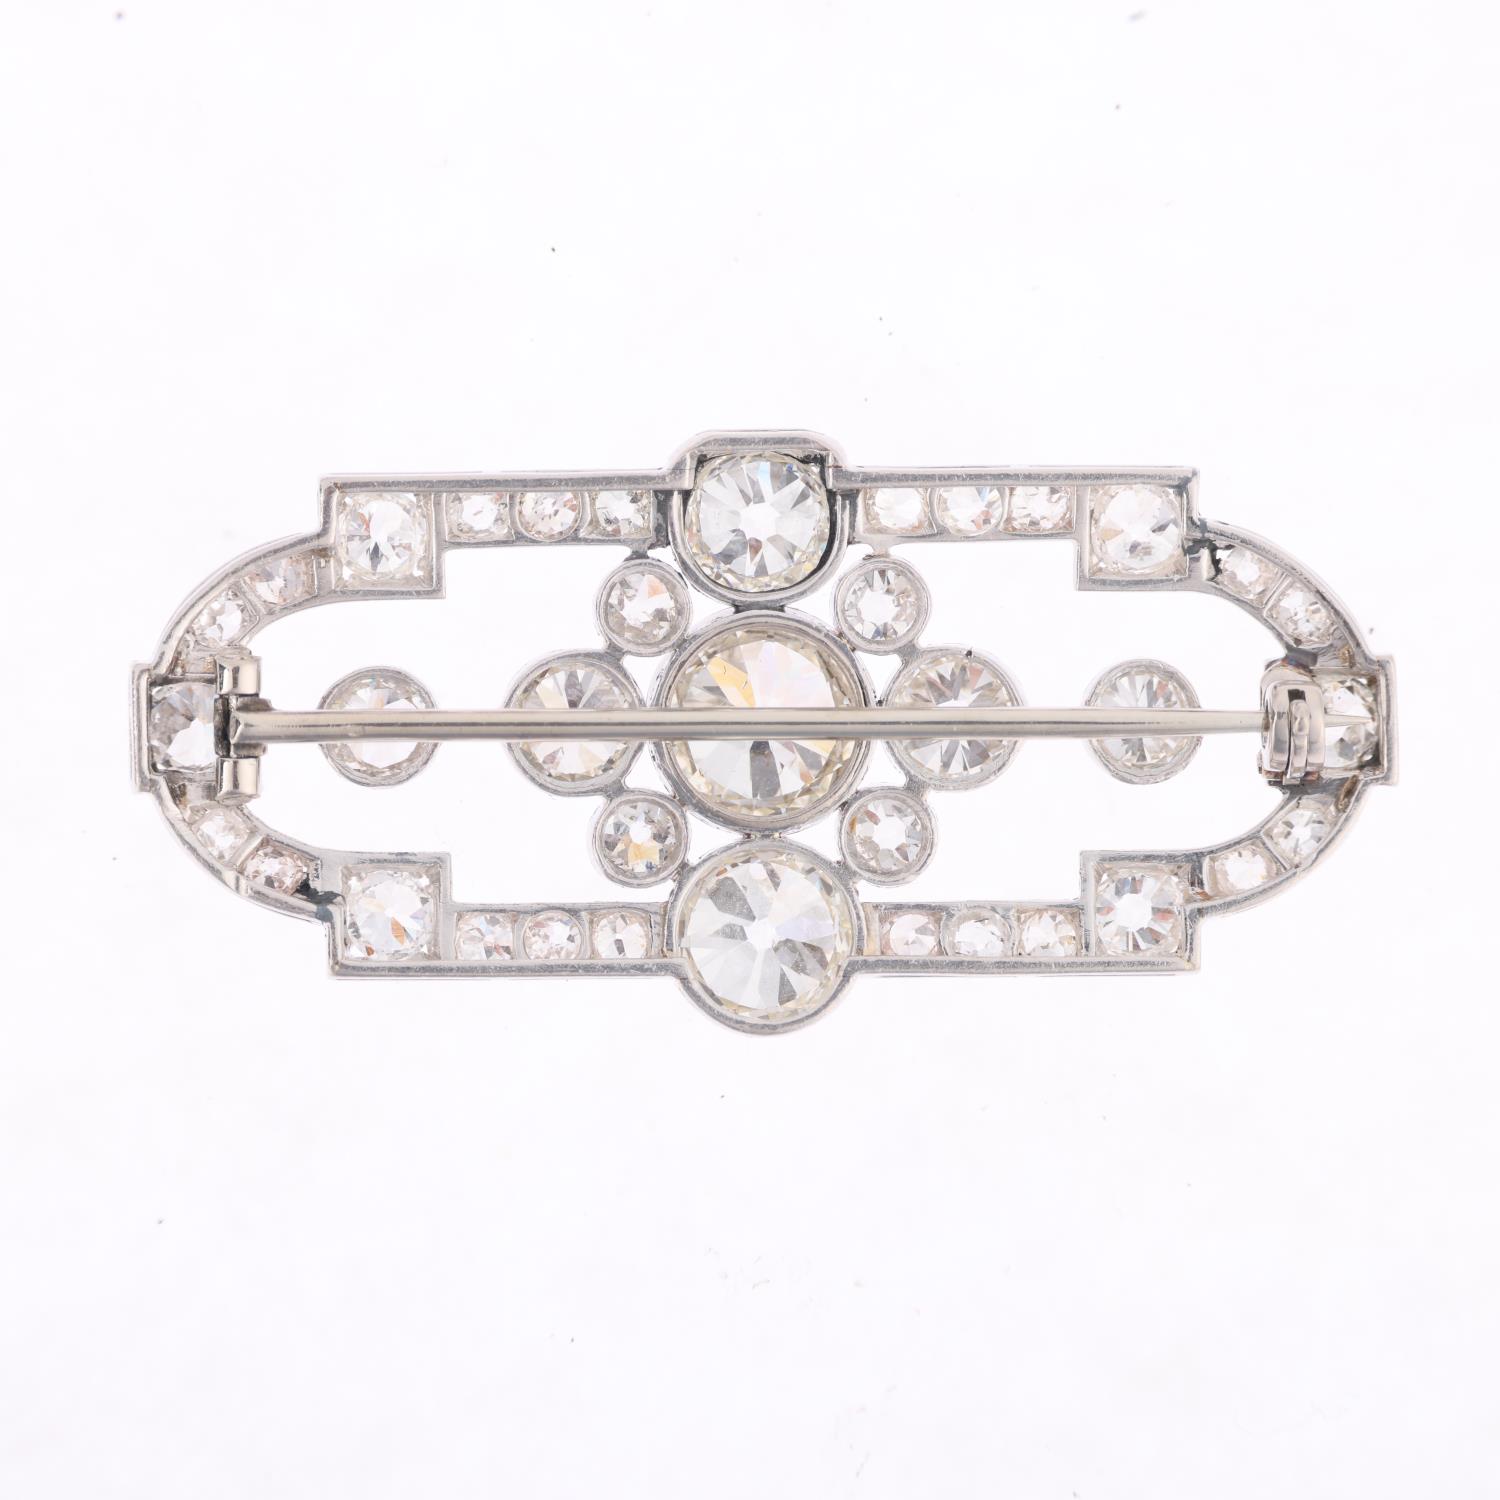 An Art Deco diamond geometric panel brooch, circa 1925, total diamond content approx 7ct, - Image 3 of 4